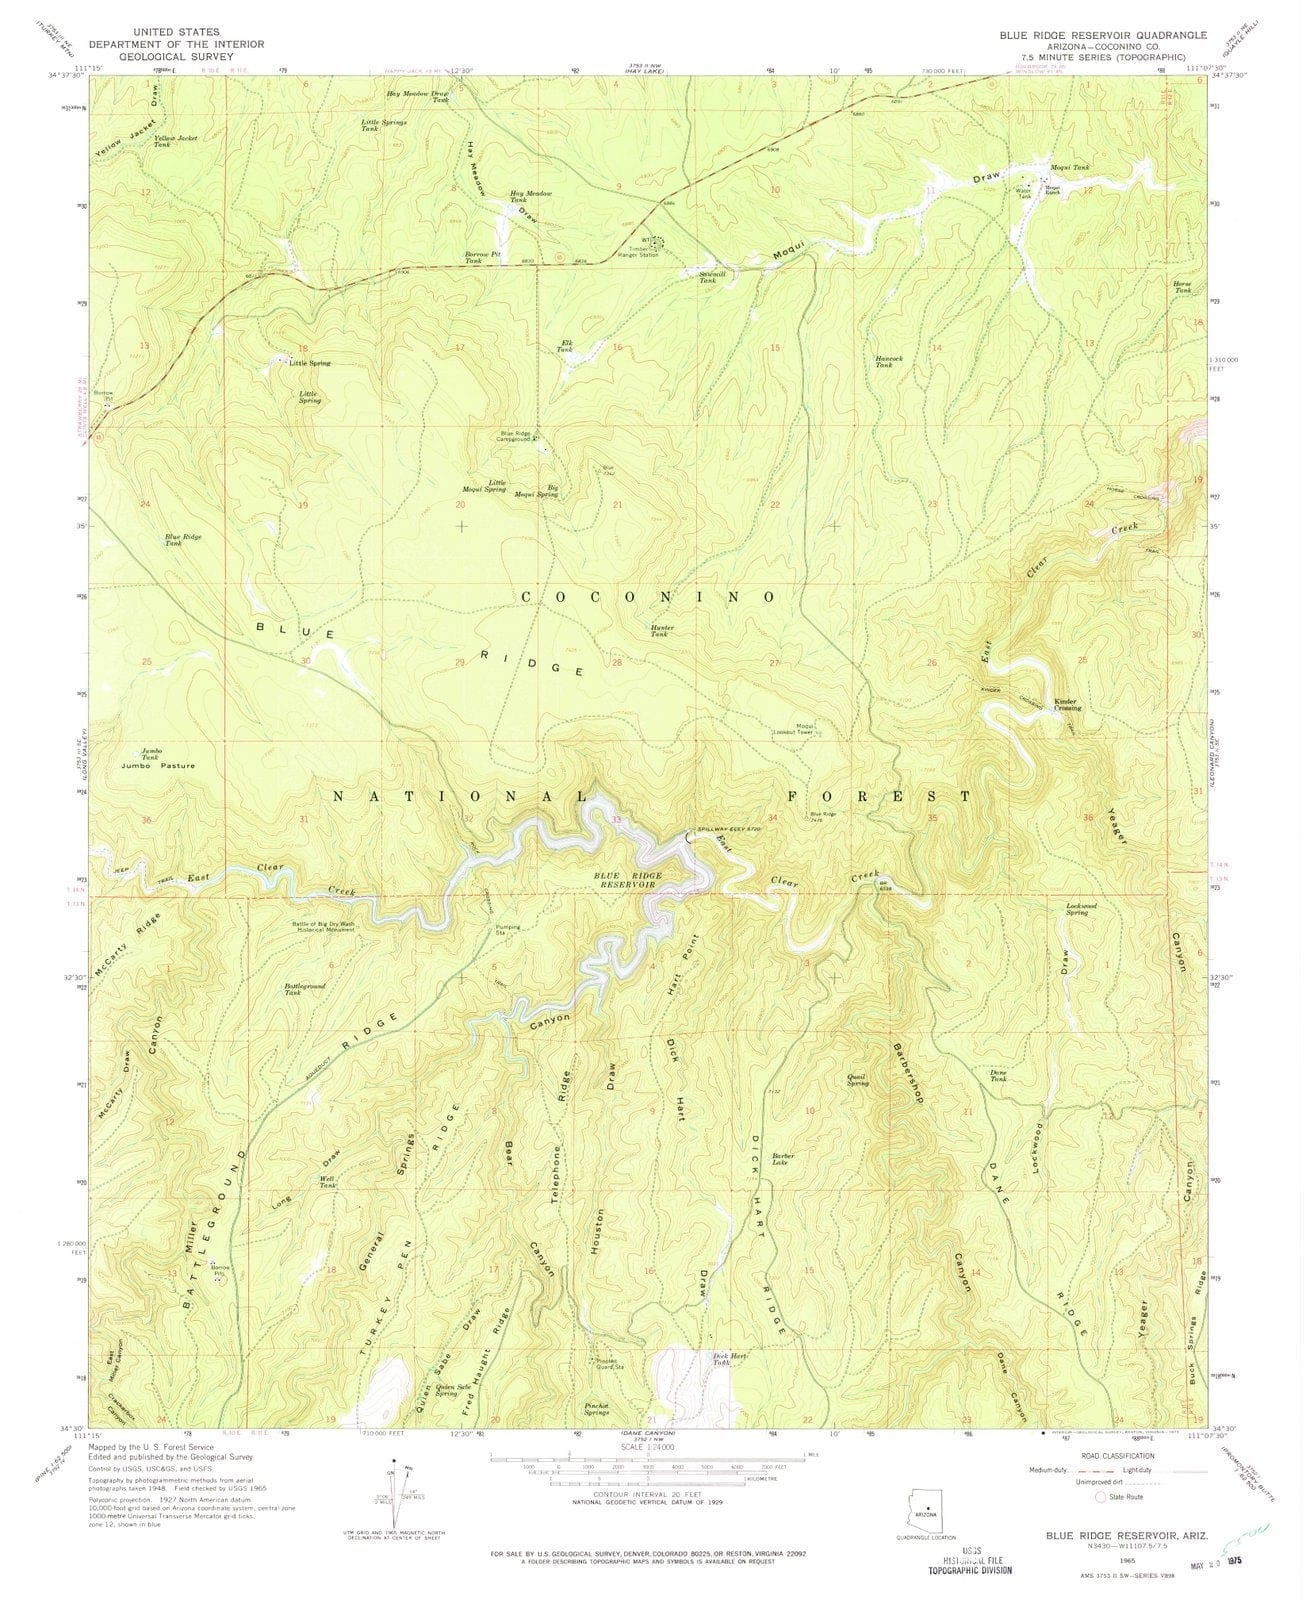 1965 Blue Ridge Reservoir, AZ - Arizona - USGS Topographic Map